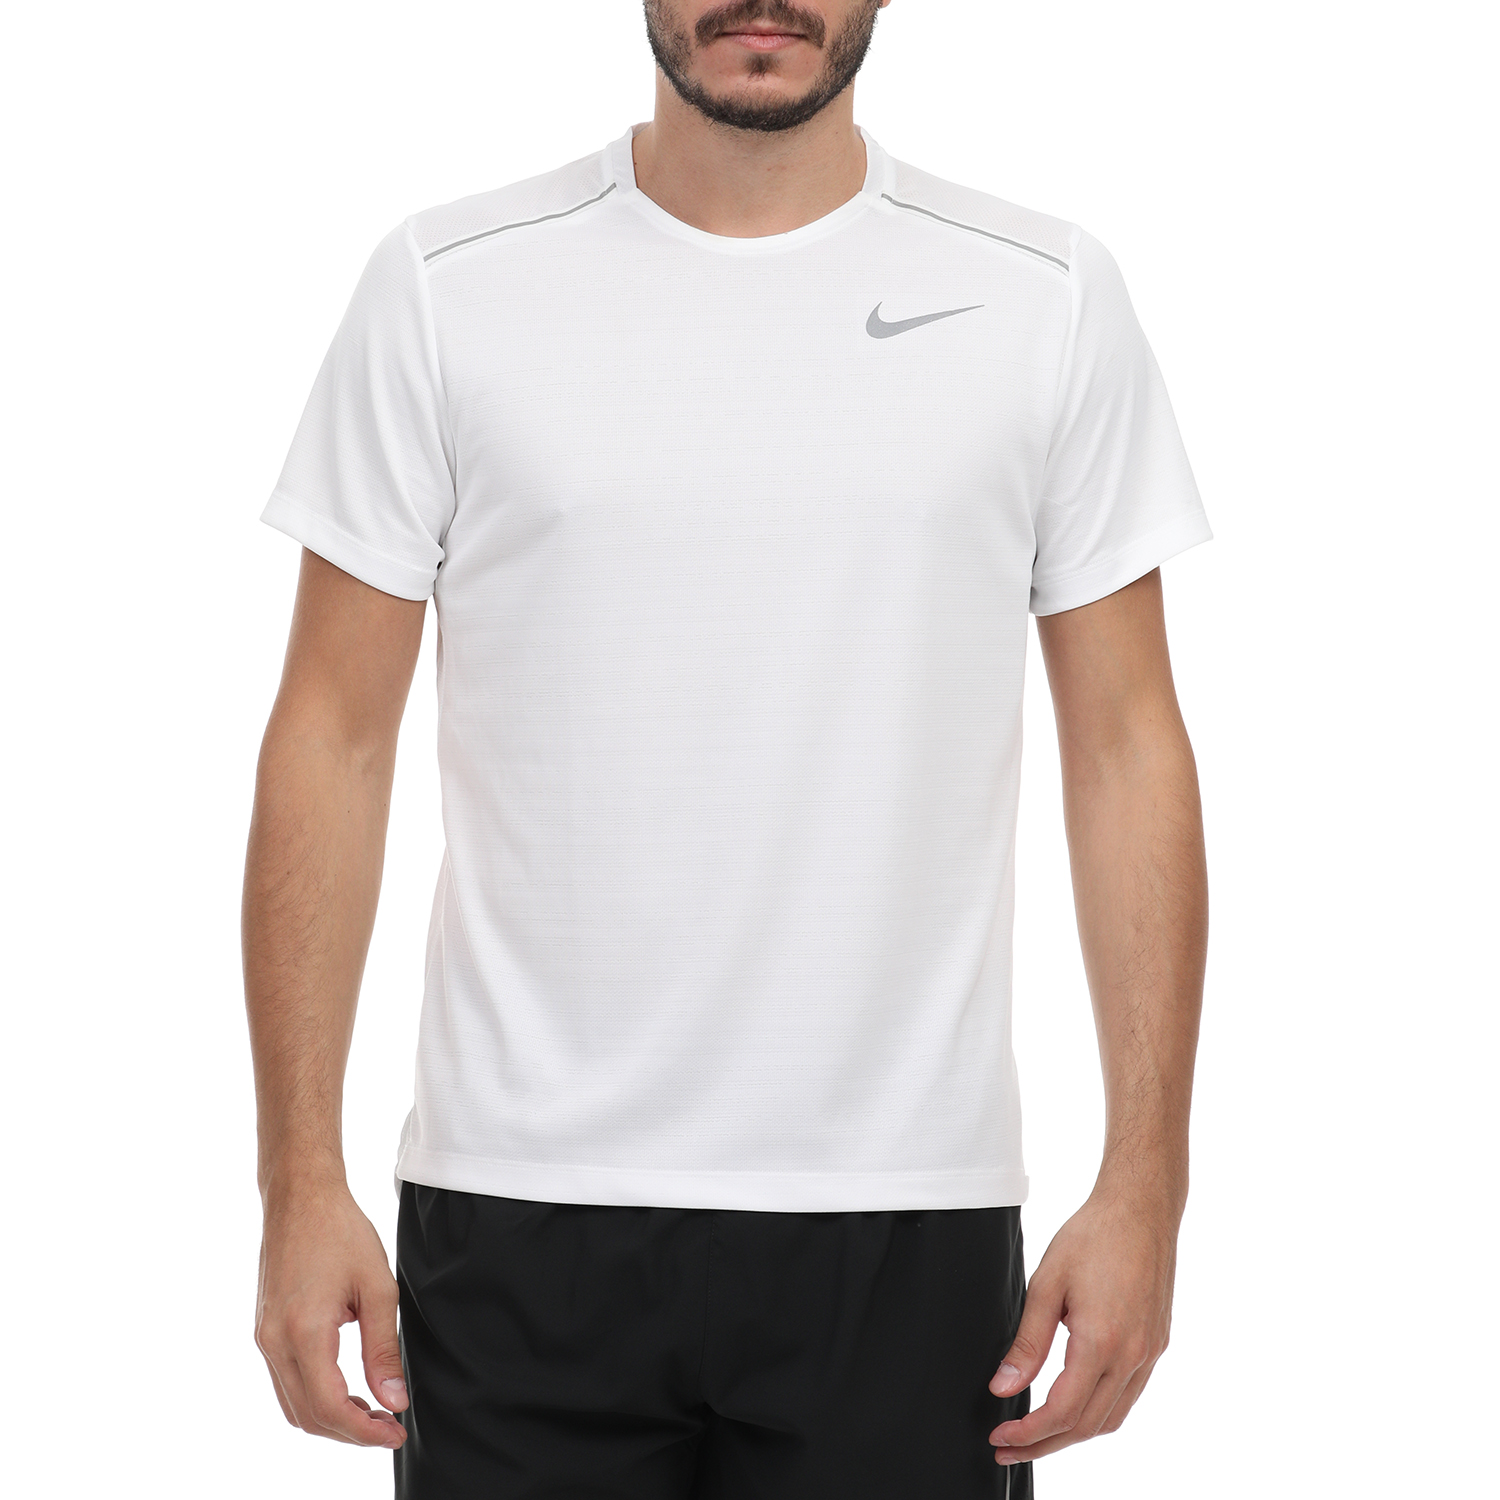 NIKE - Ανδρικό t-shirt NIKE DRY MILER λευκό Ανδρικά/Ρούχα/Αθλητικά/T-shirt